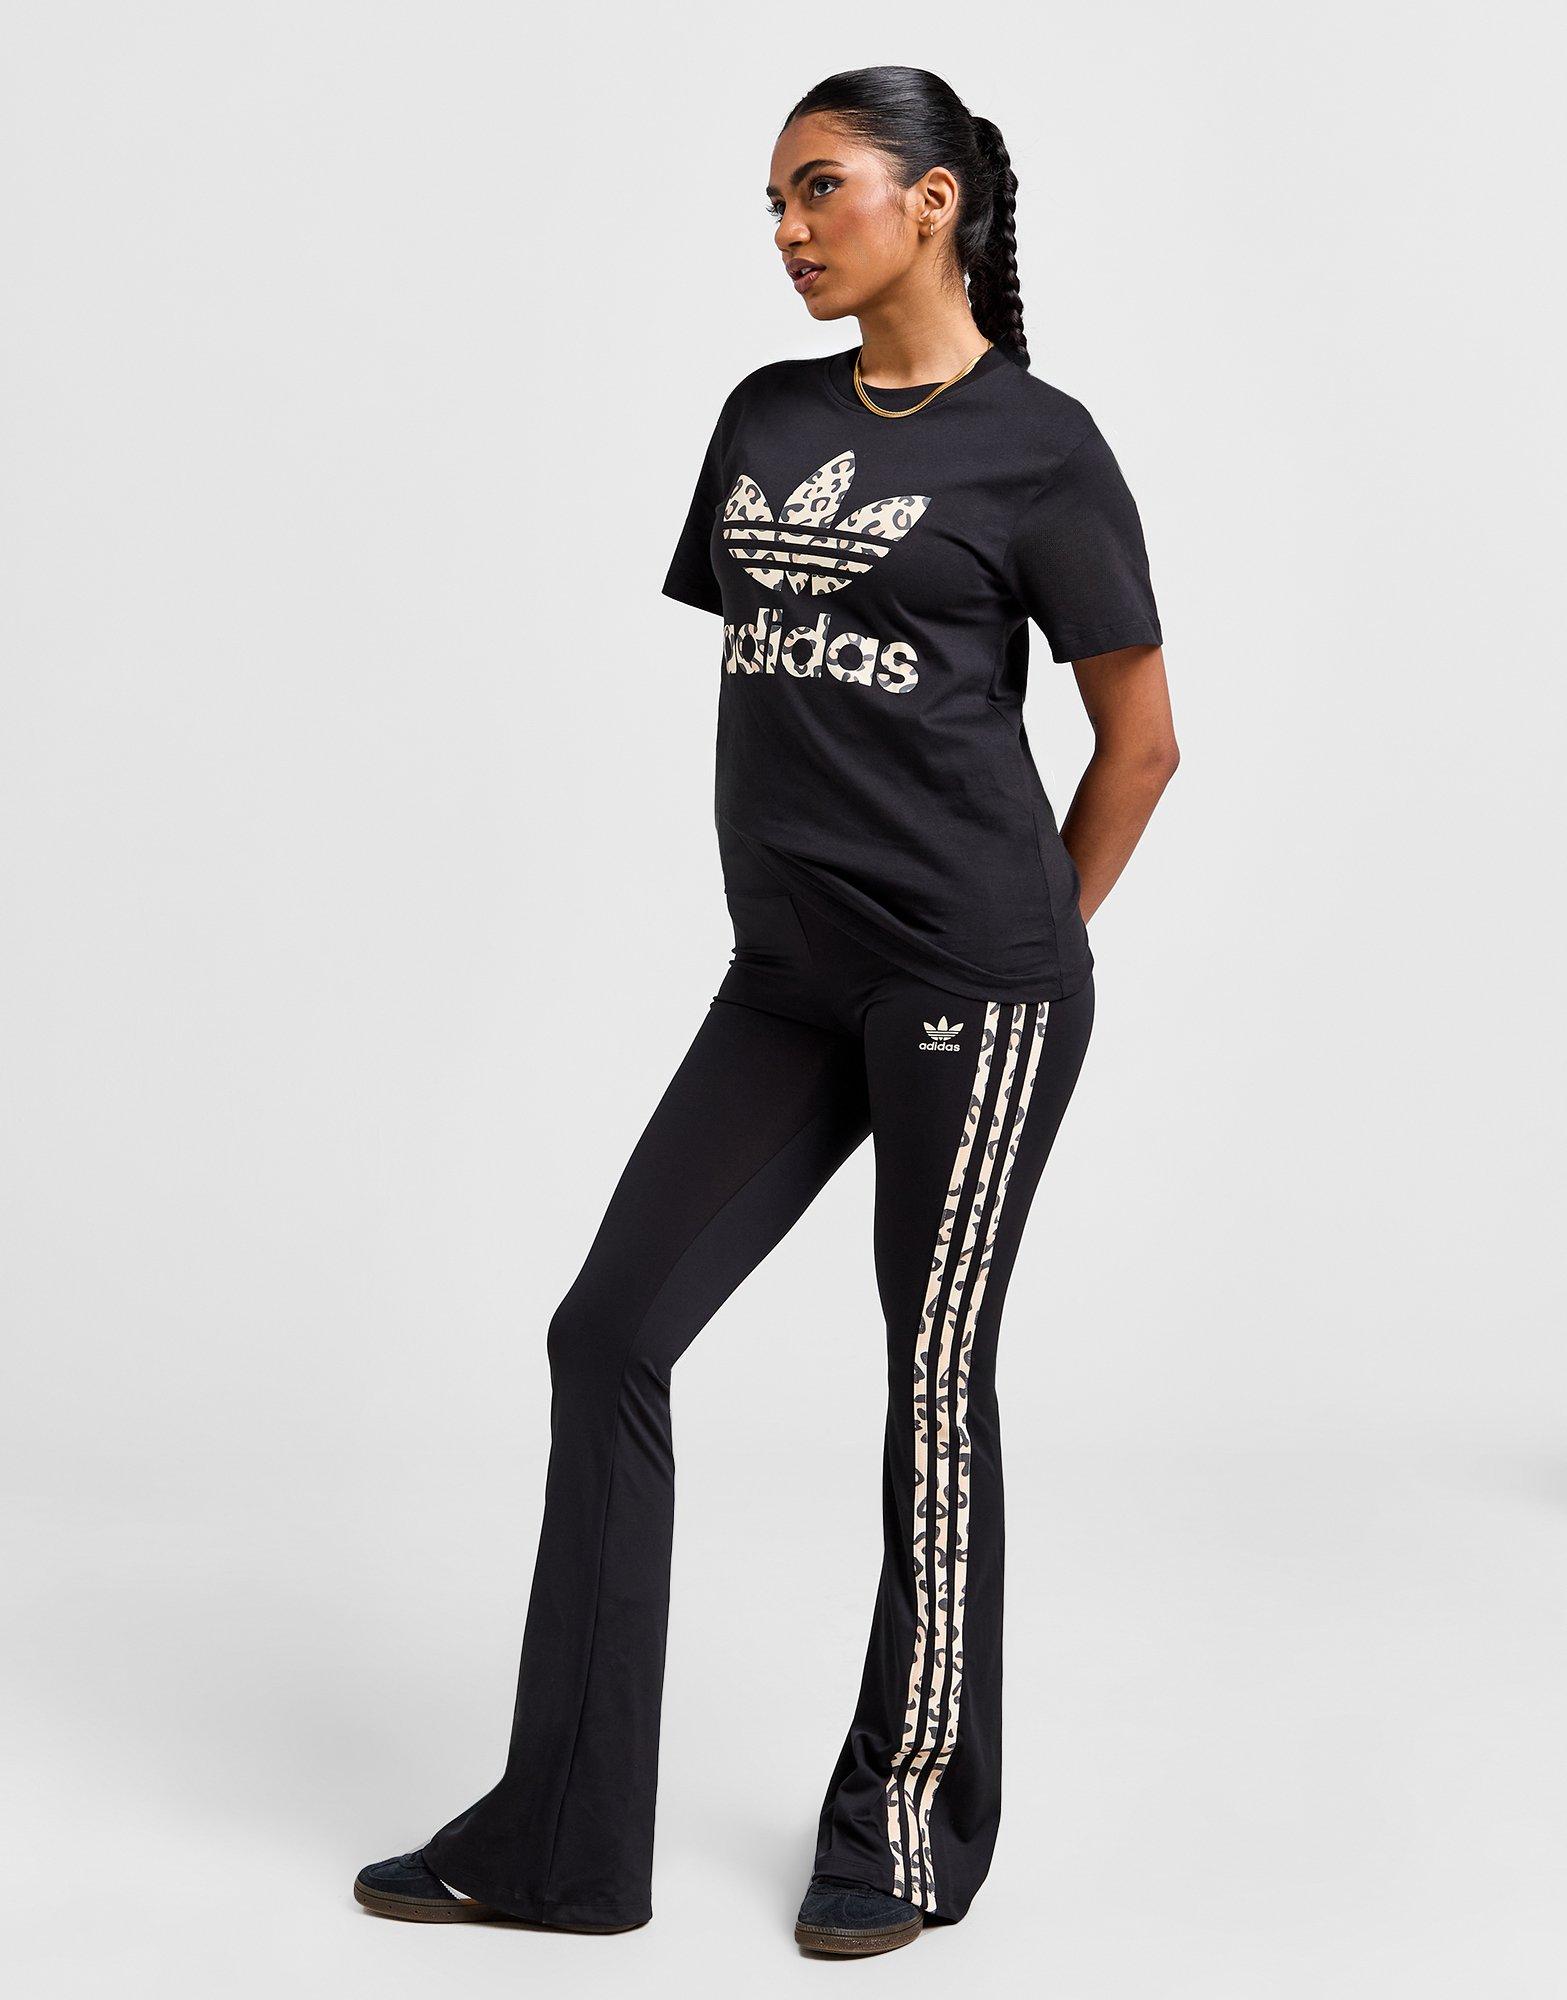 Women's adidas Originals Trefoil 3-Stripes Leggings  Outfits with leggings,  Womens printed leggings, Adidas leggings outfit